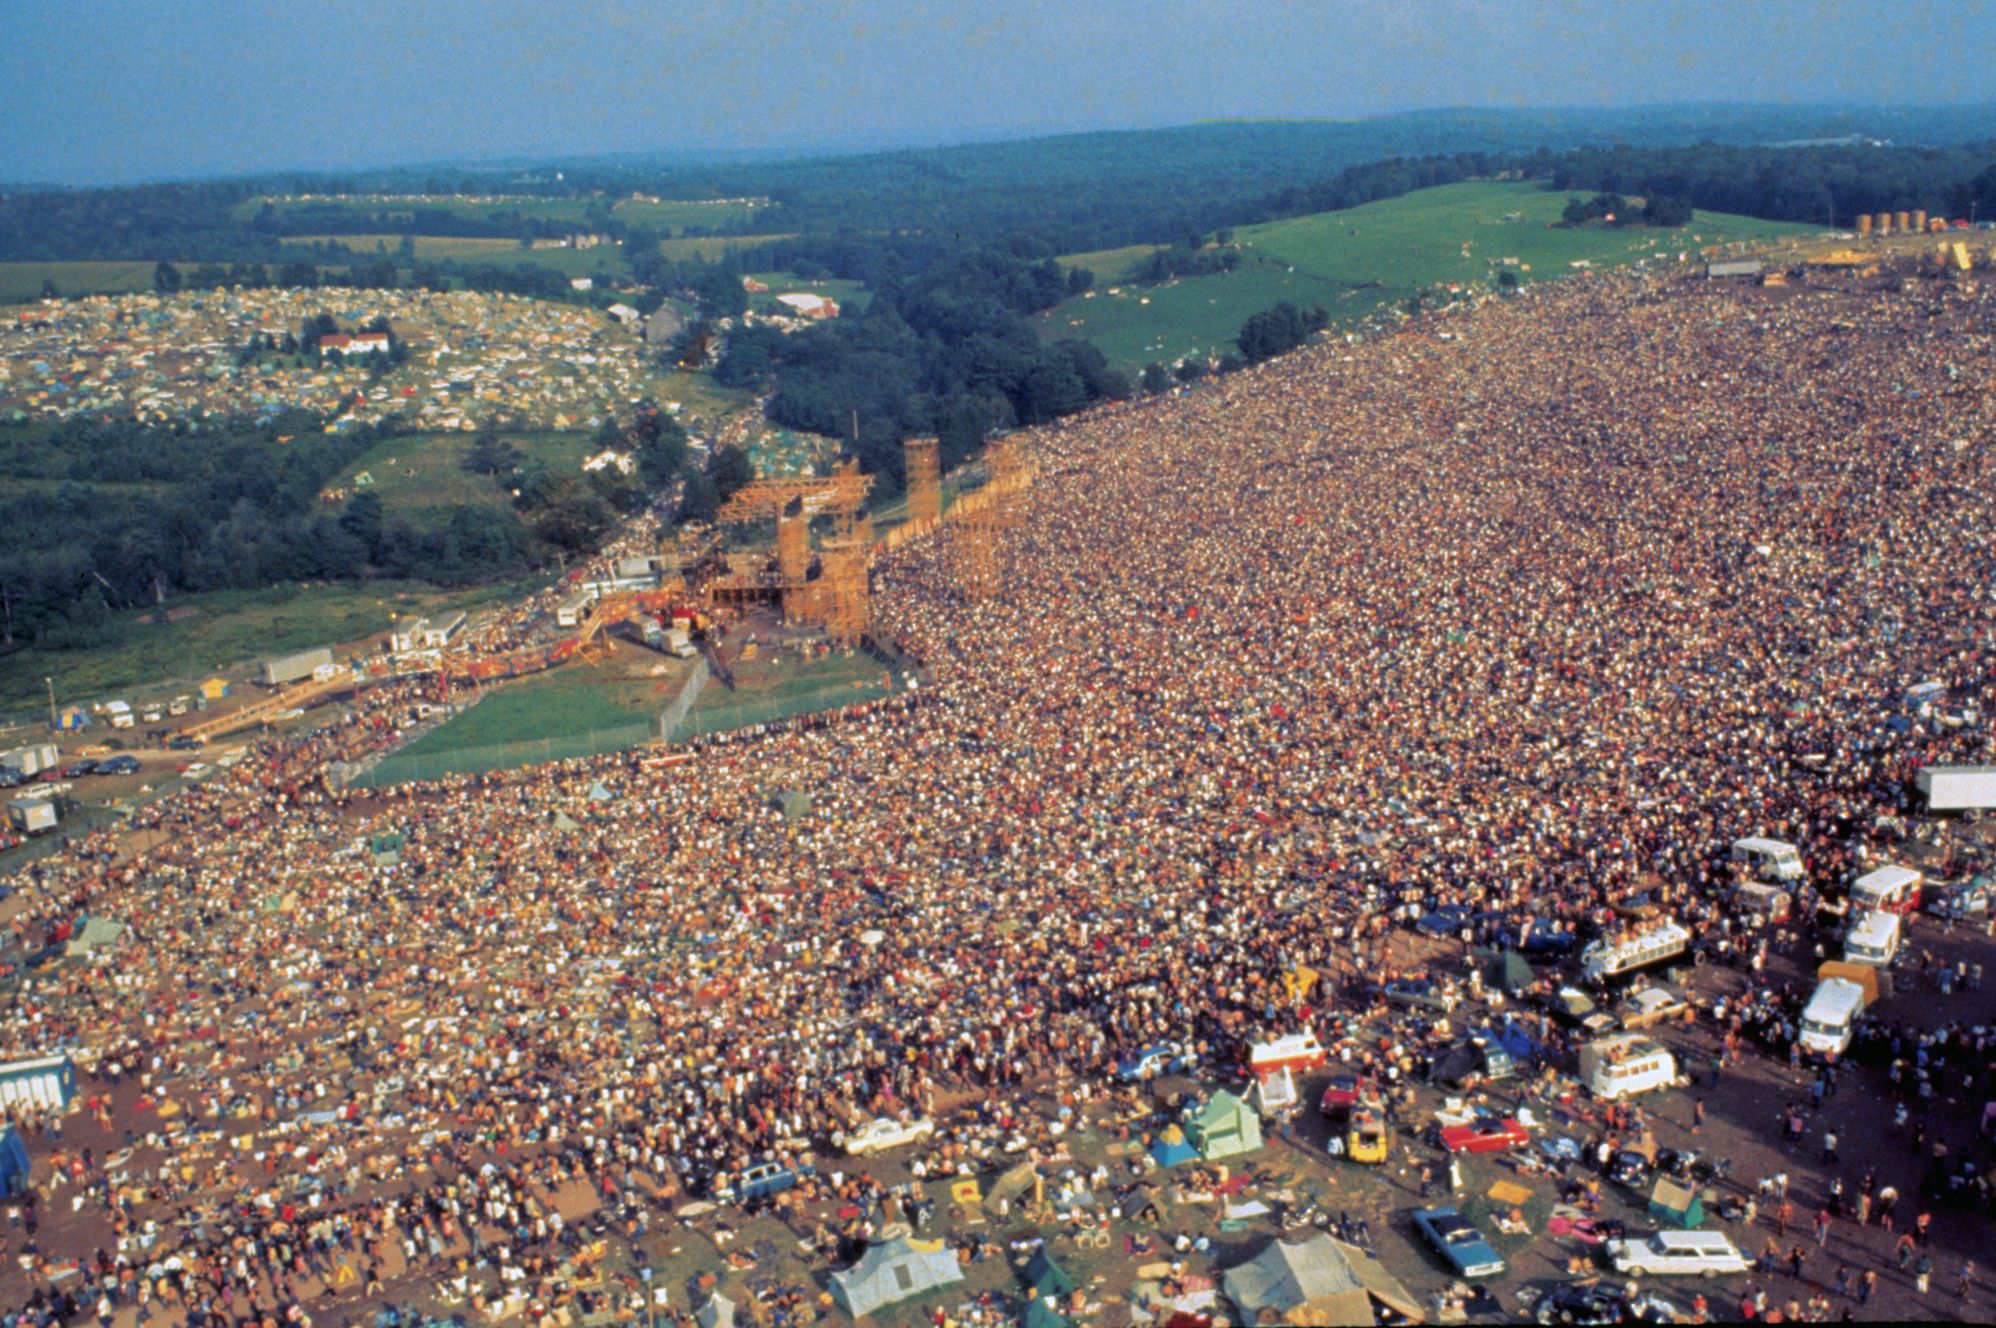 The crowd at Woodstock (Courtesy of Barry Z Levine, www.WoodstockWitness.com)